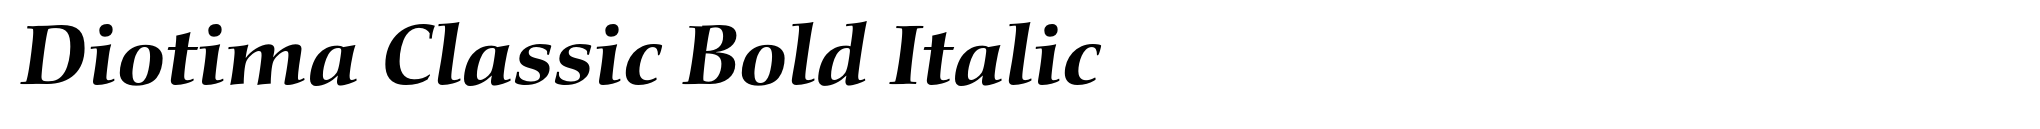 Diotima Classic Bold Italic image